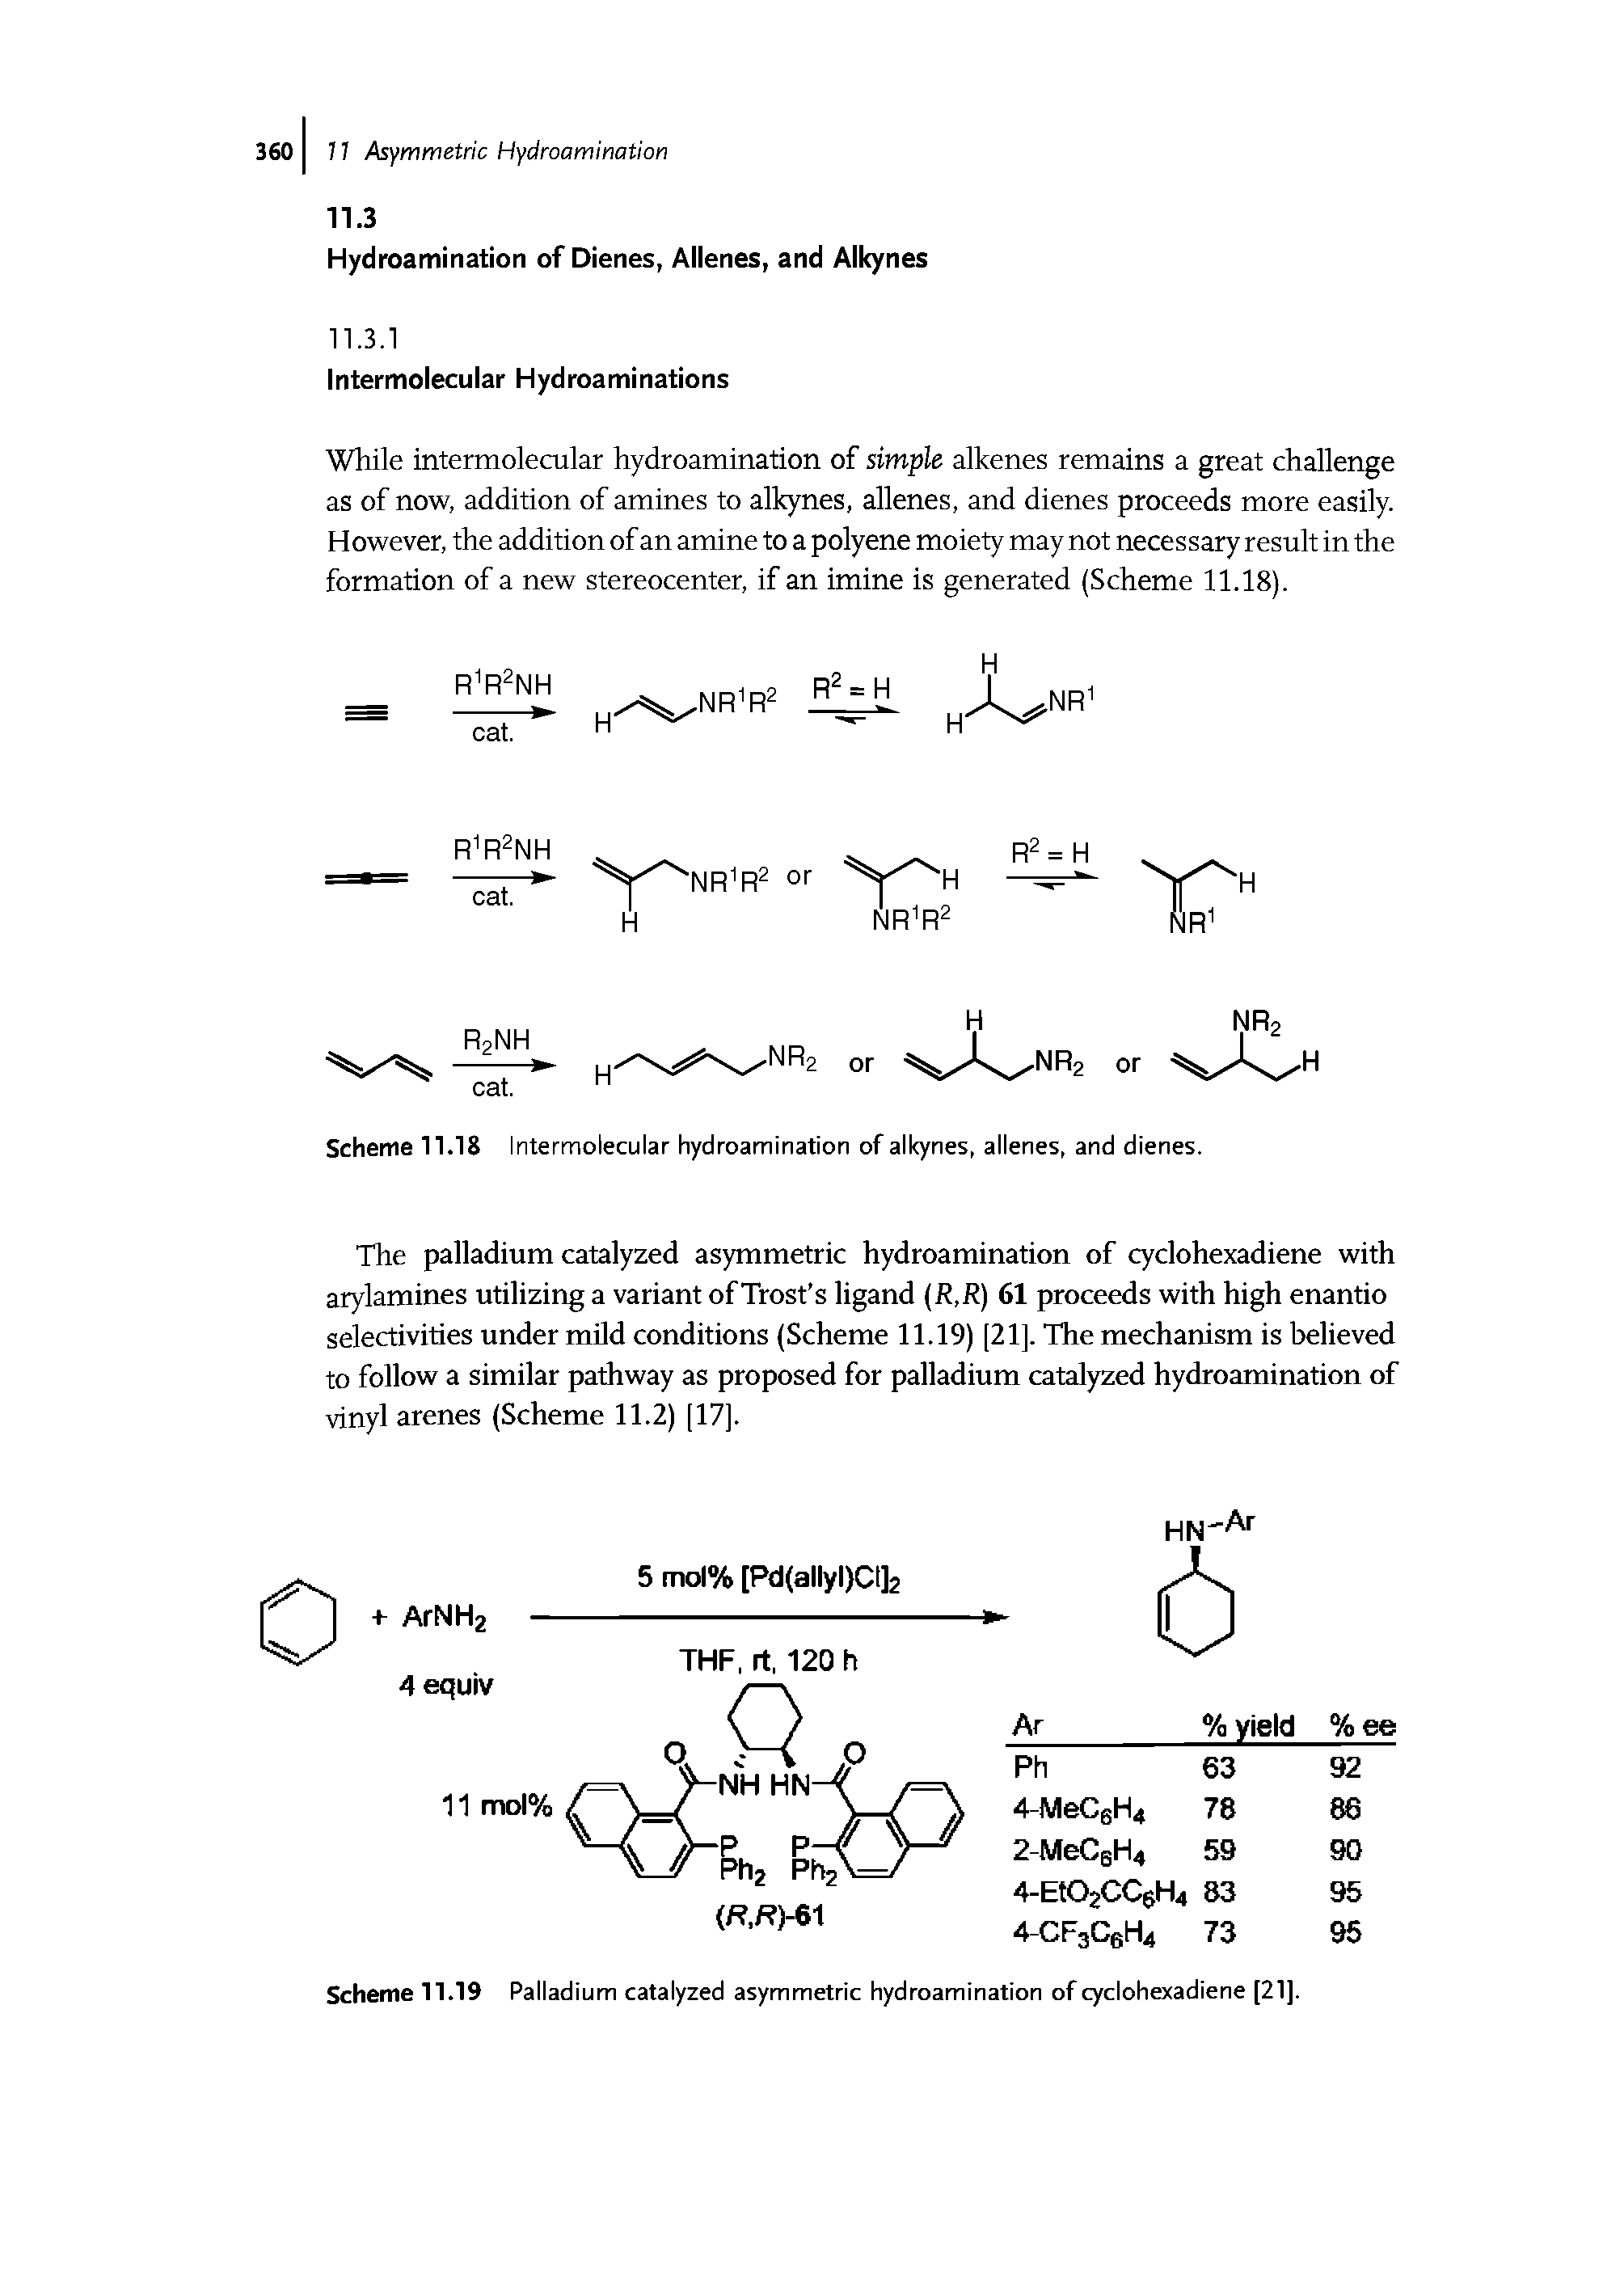 Scheme 11.19 Palladium catalyzed asymmetric hydroamination of cyclohexadiene [21].